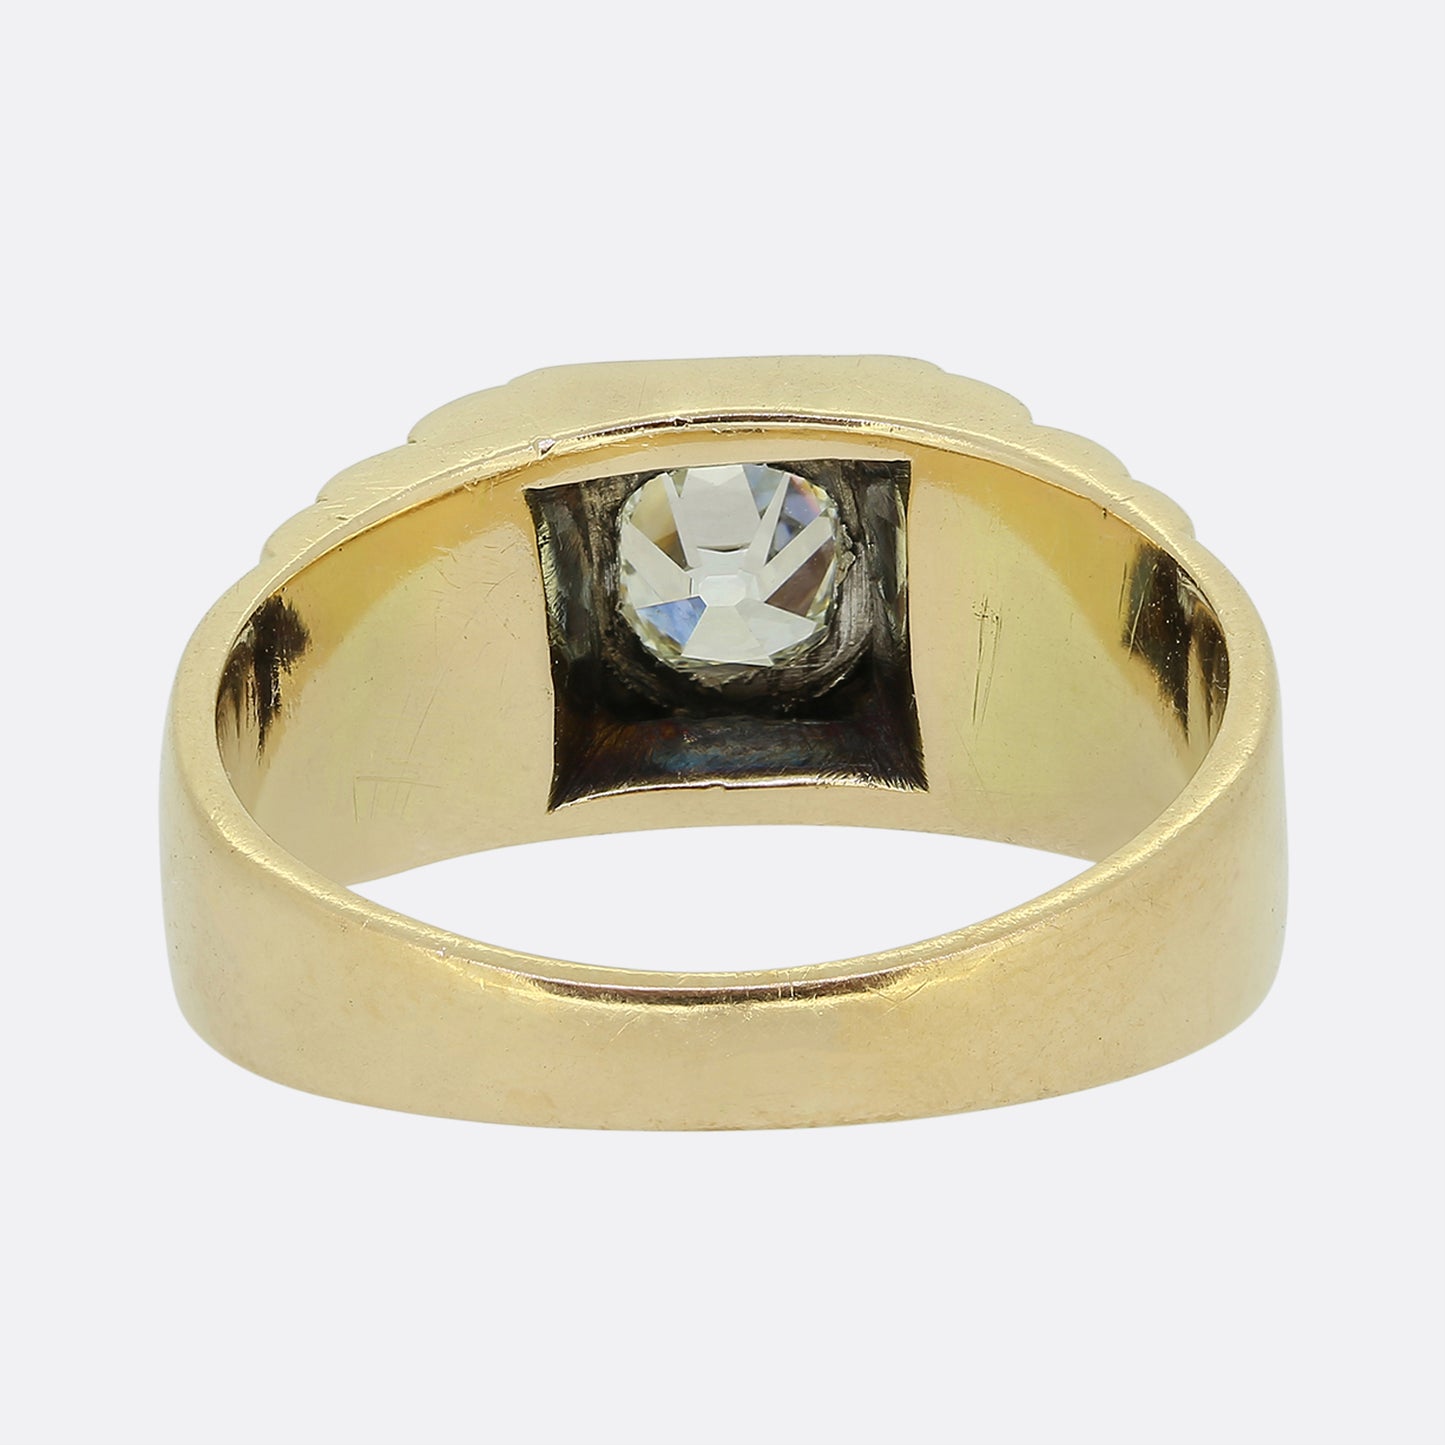 Antique Old Cut Diamond Signet Ring